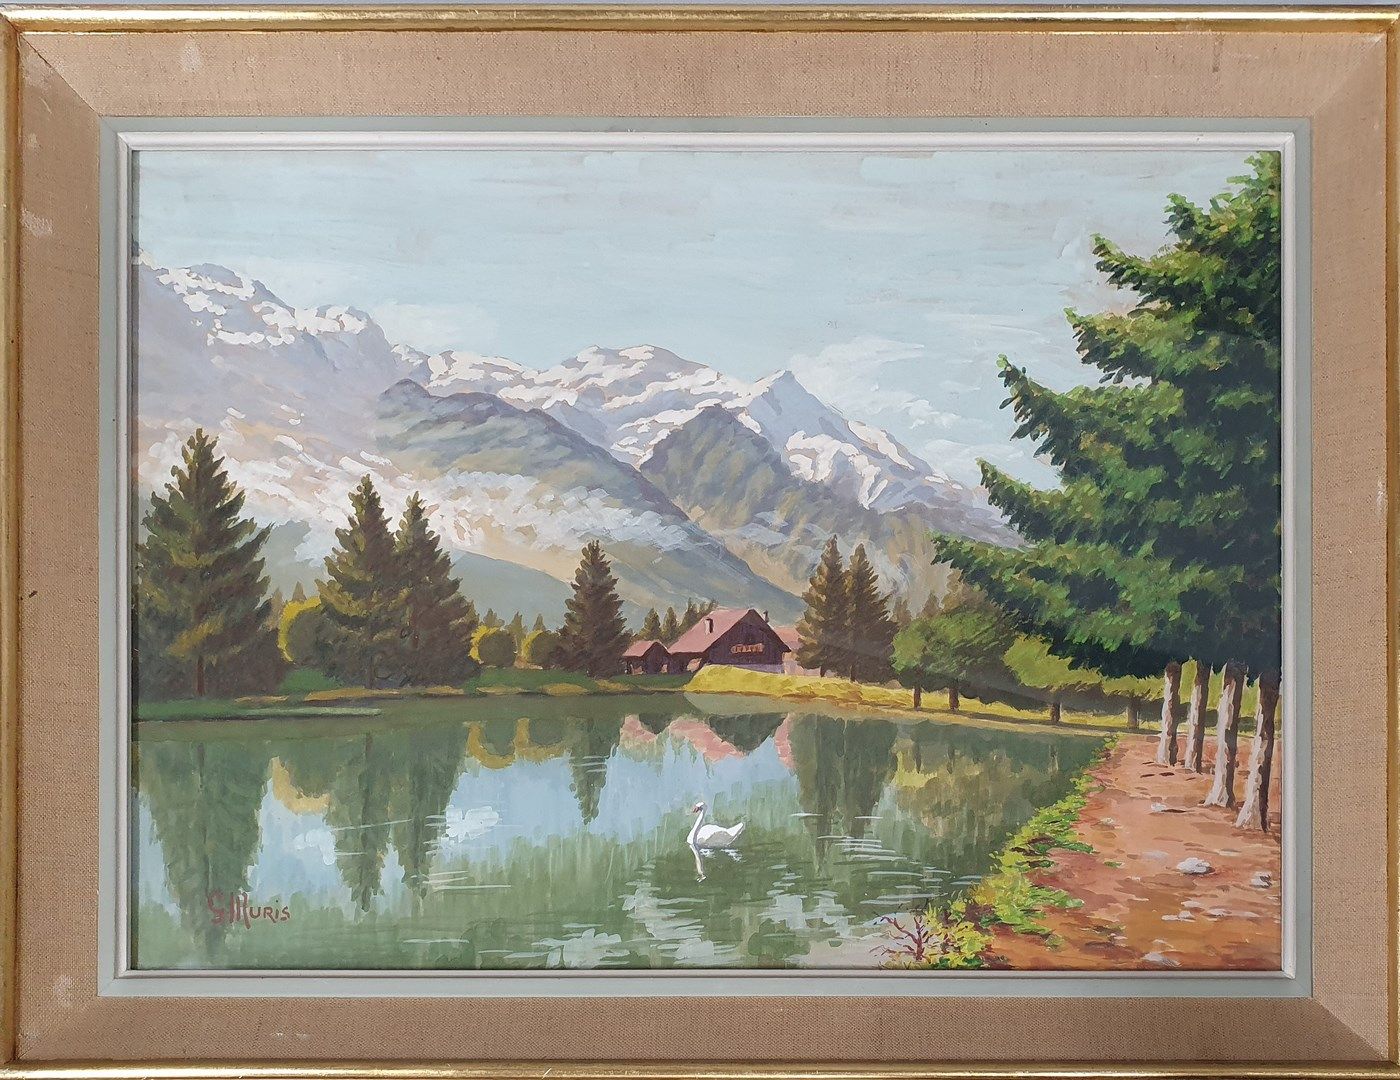 Null 穆里斯-乔治 (c.1914-1988)

湖边的瑞士木屋

纸上水粉画，左下方签名

38 x 53 厘米